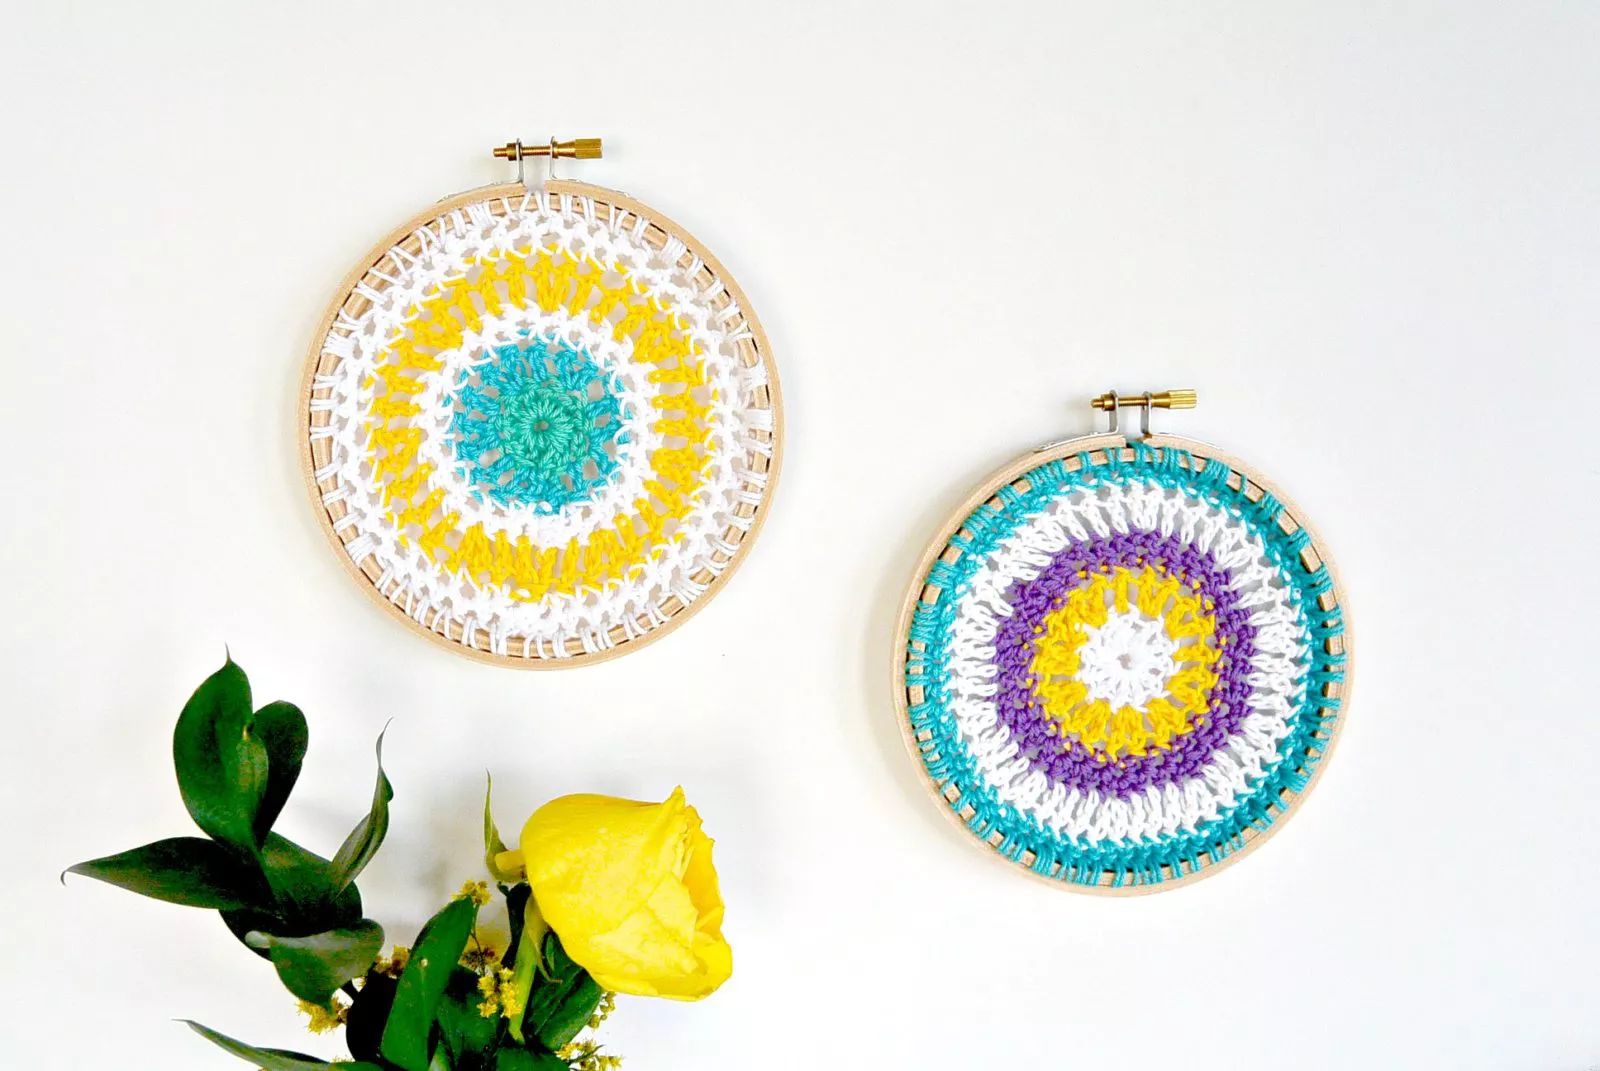 Make Crocheted Mandalas